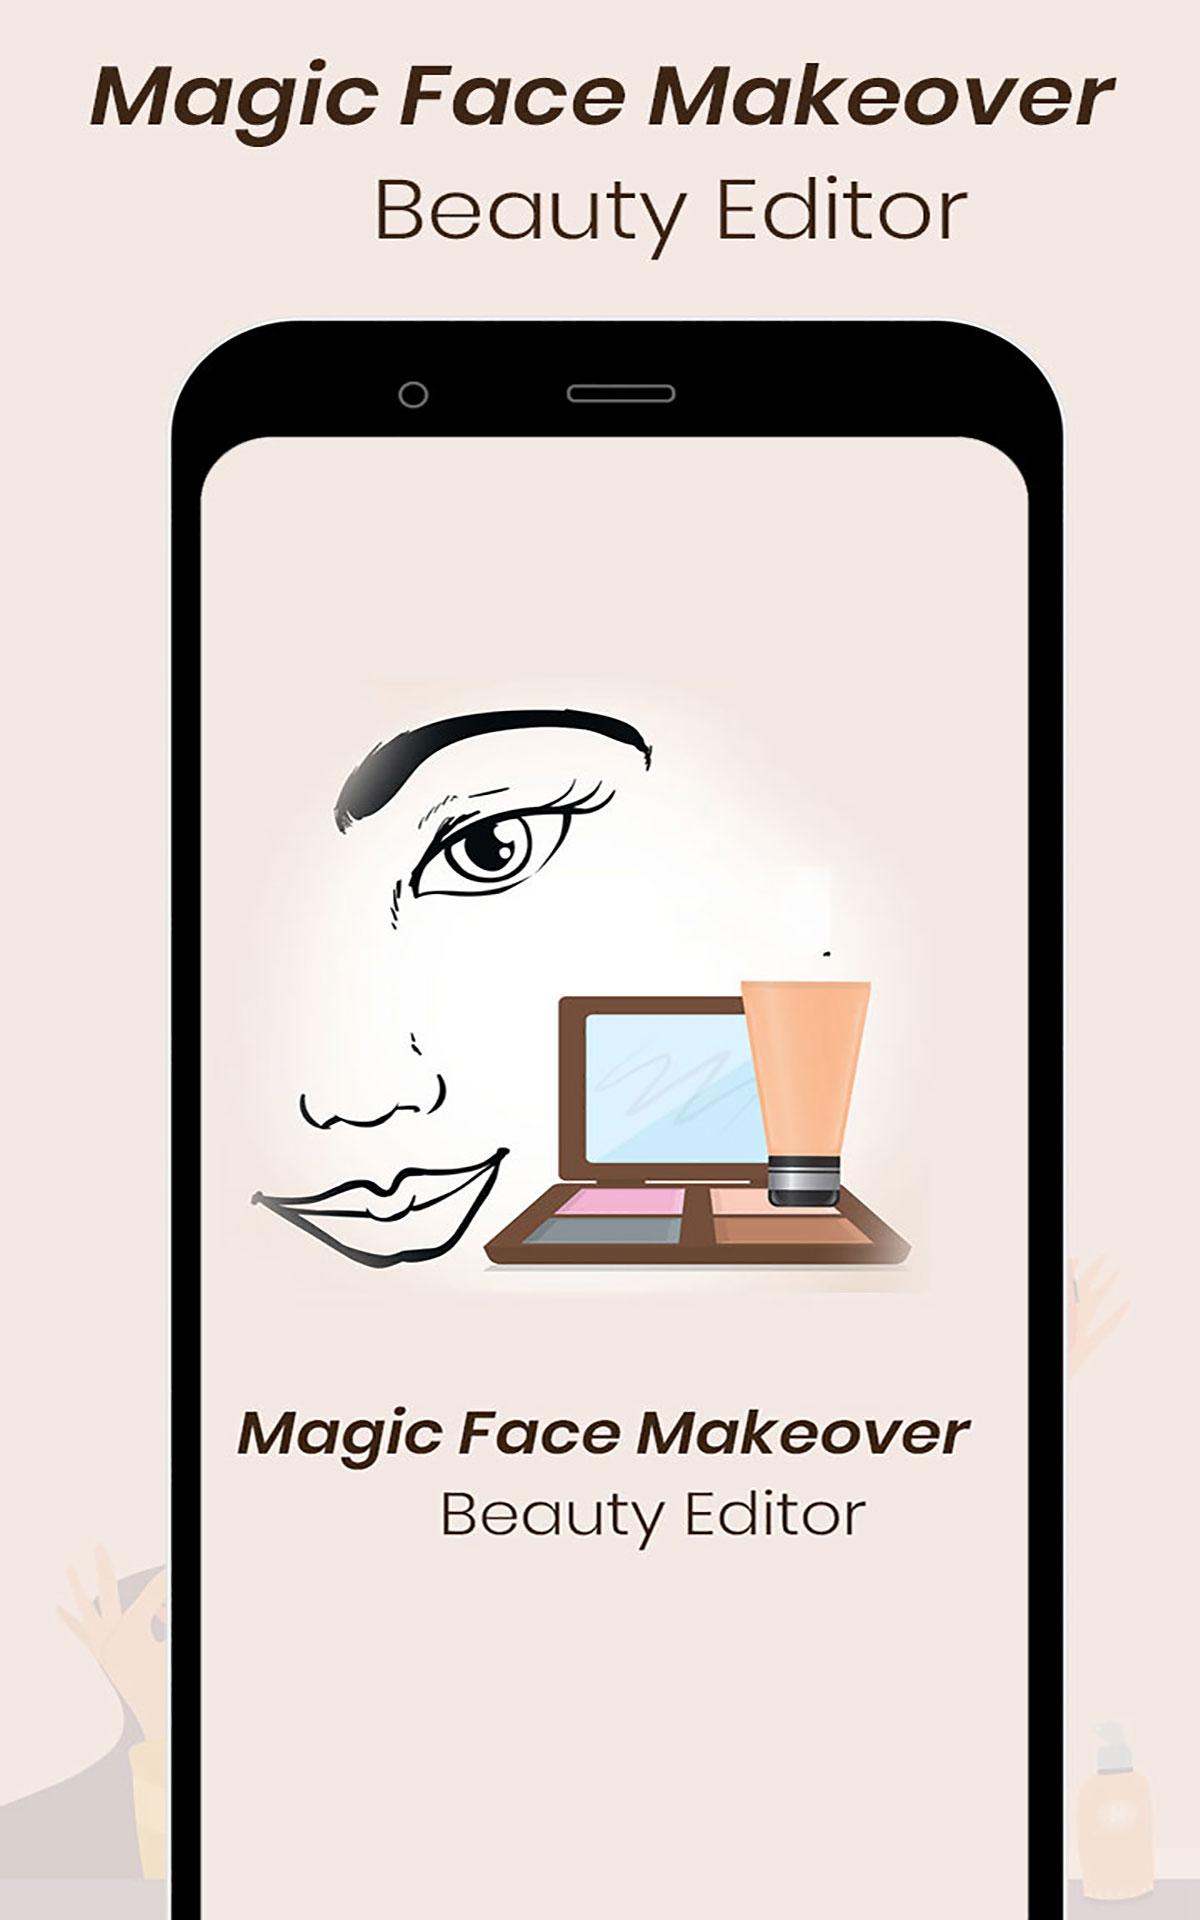 Magic Face Makeover - Beauty Editor 1.0 Screenshot 13